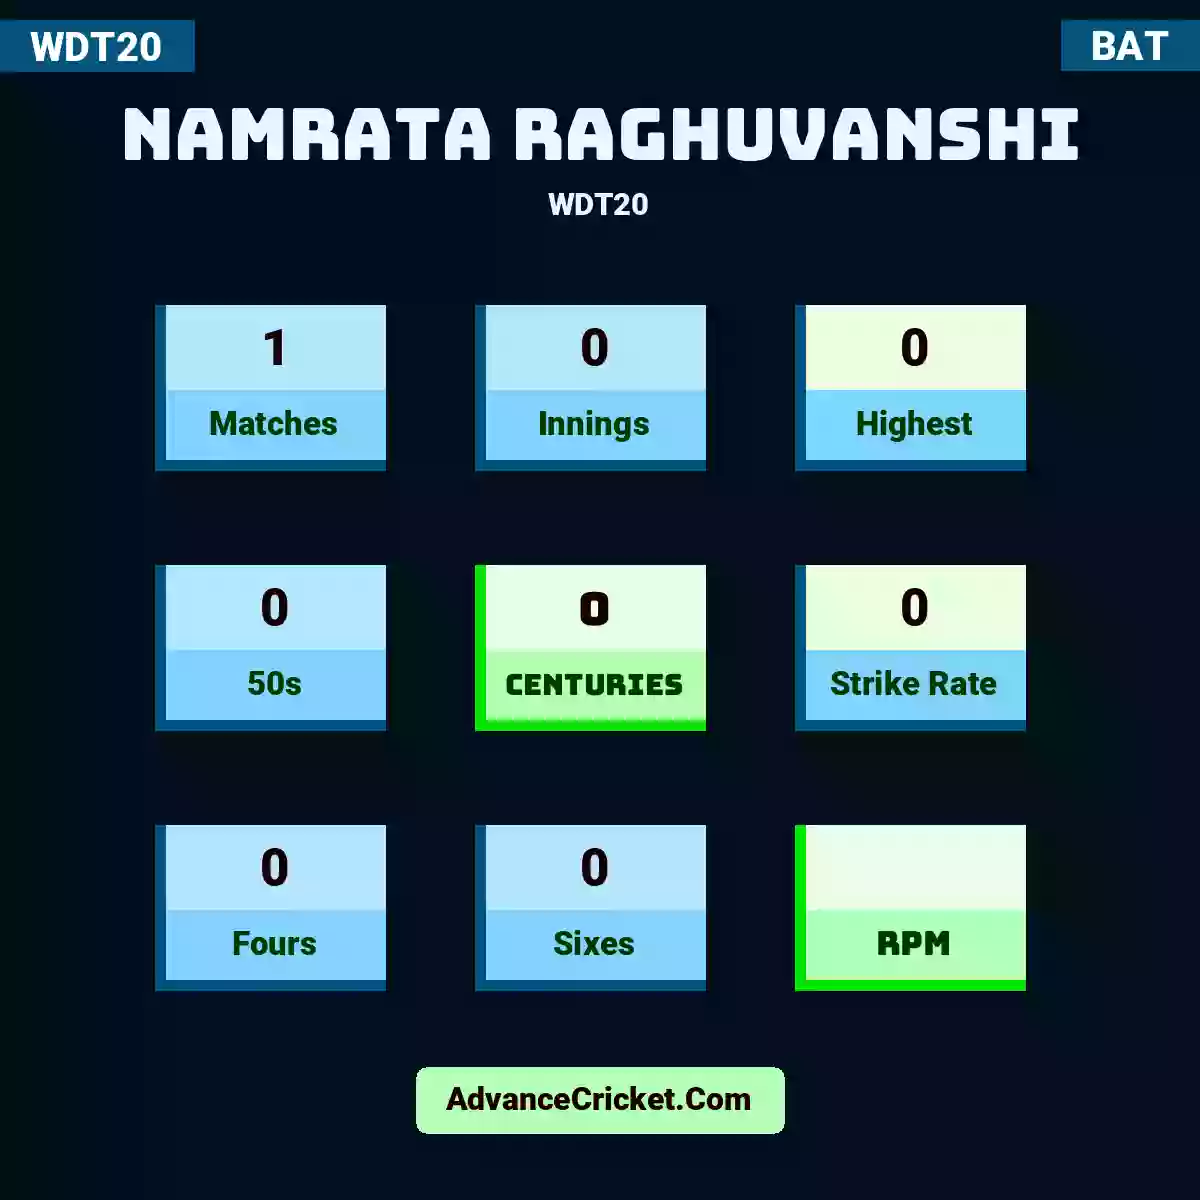 Namrata Raghuvanshi WDT20 , Namrata Raghuvanshi played 1 matches, scored 0 runs as highest, 0 half-centuries, and 0 centuries, with a strike rate of 0. N.Raghuvanshi hit 0 fours and 0 sixes.